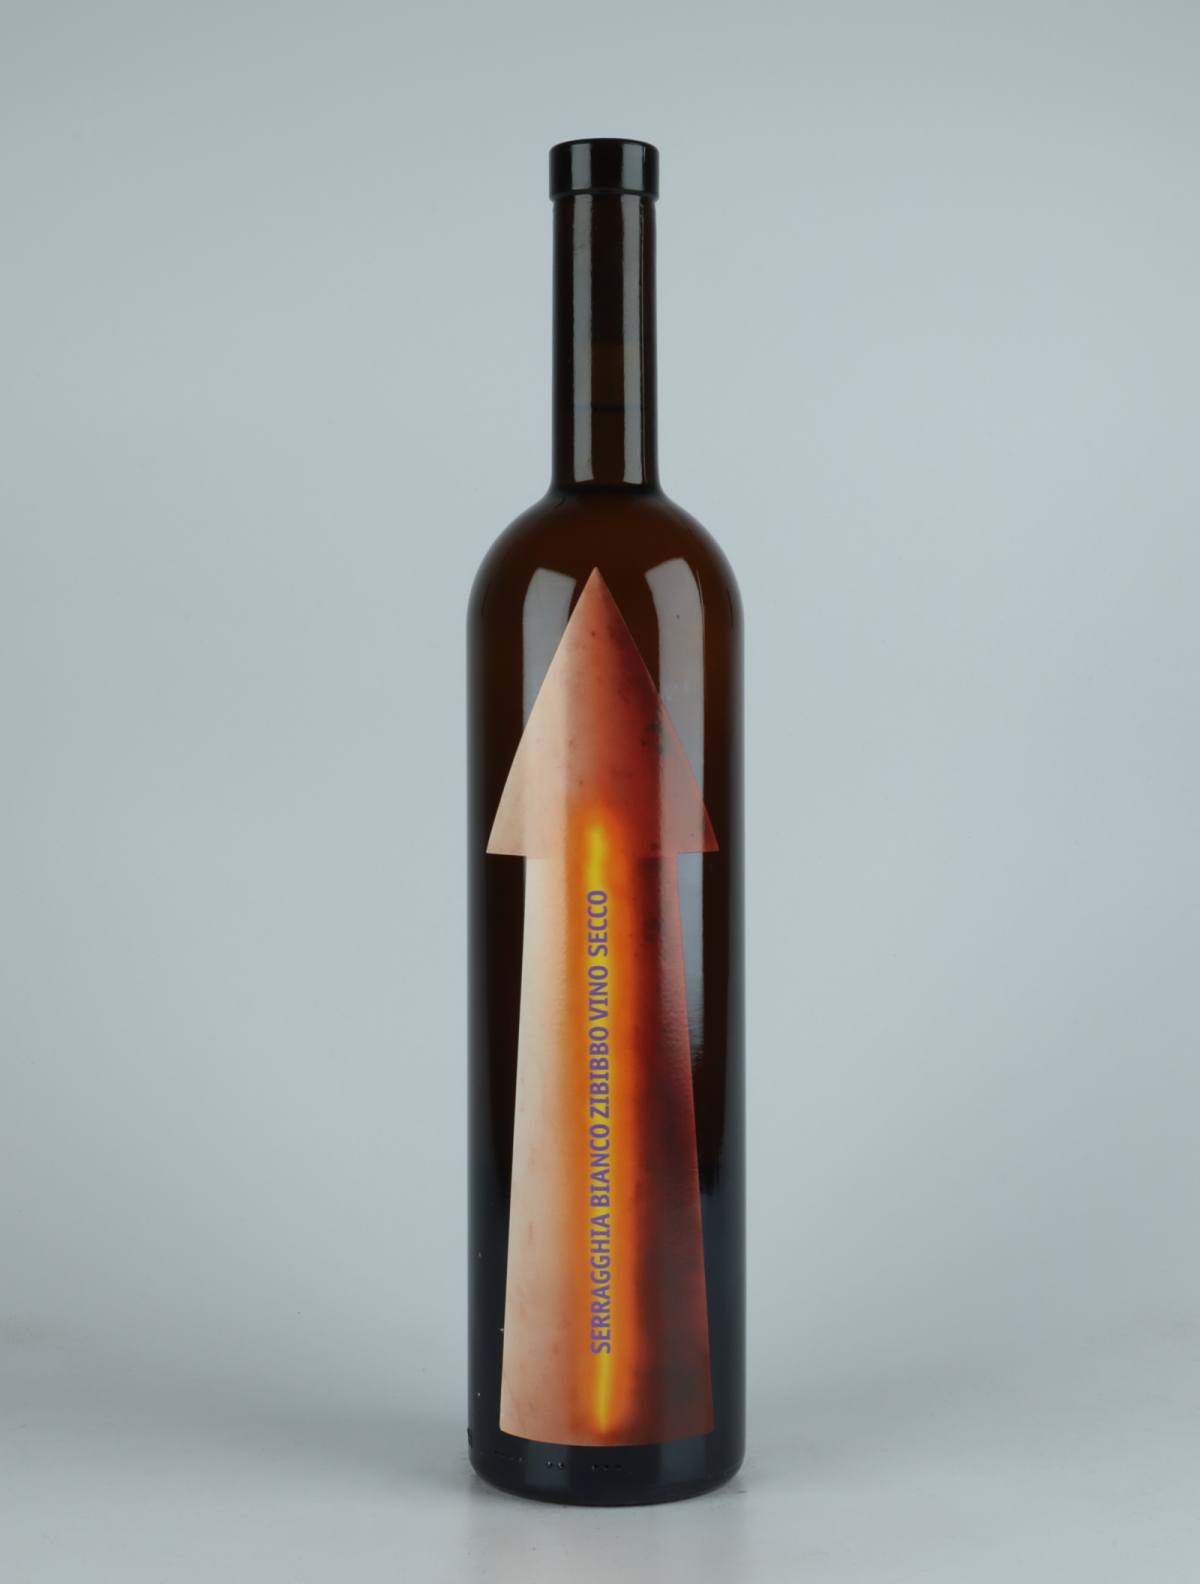 A bottle 2021 Serragghia Bianco Orange wine from Gabrio Bini, Sicily in Italy